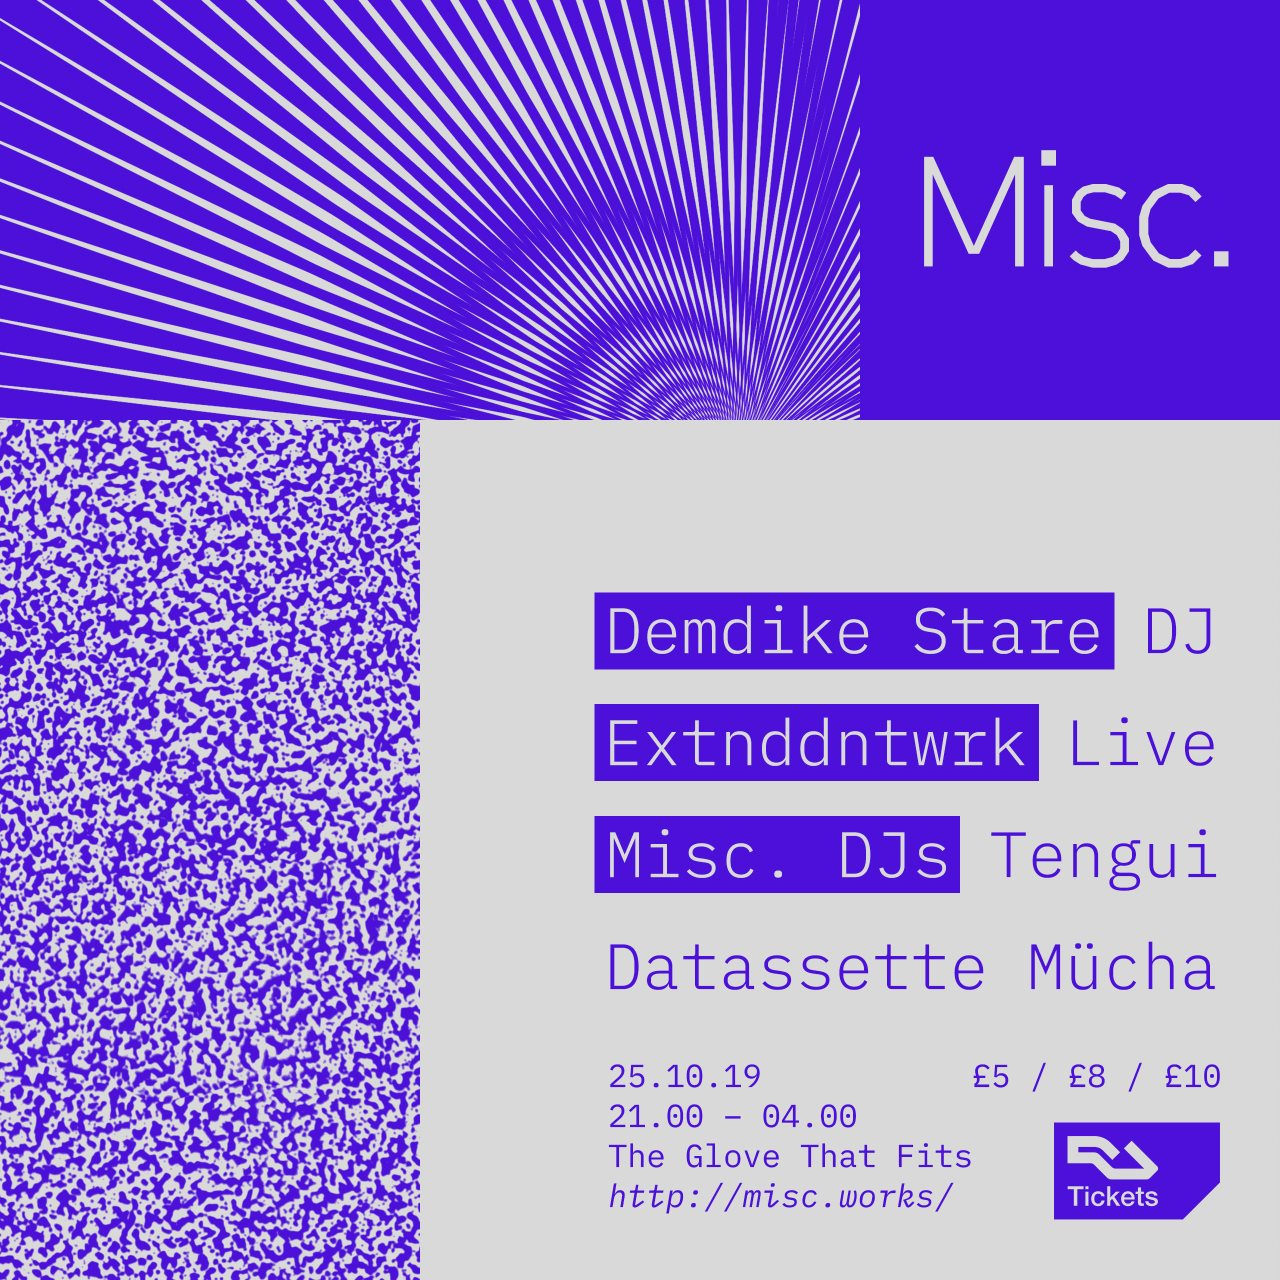 Misc. with Demdike Stare & Extnddntwrk - Flyer front